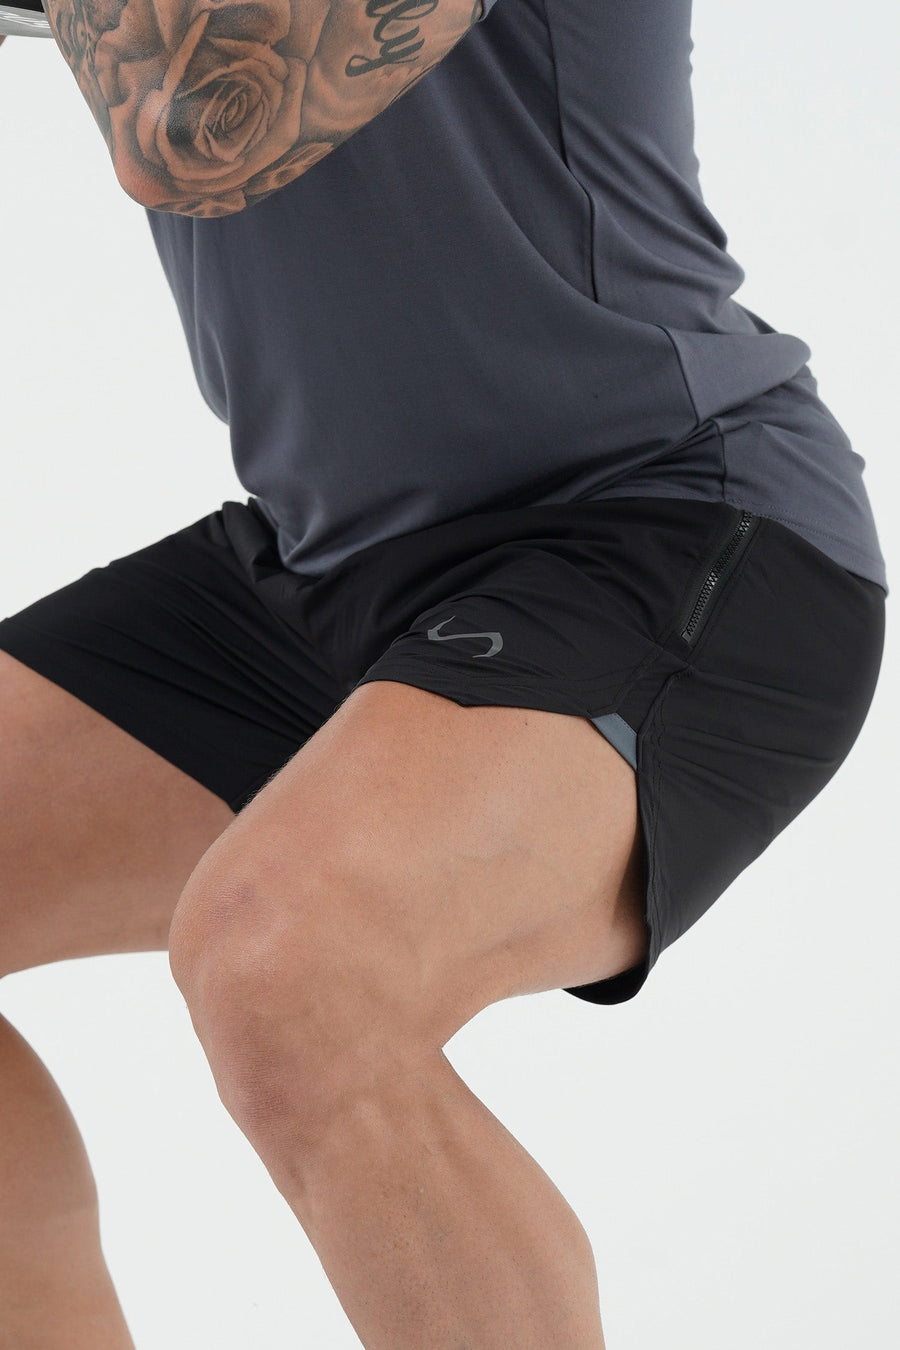 TLF Vital Element 5” Gym Shorts - 5 Inch inseam Shorts - Black - 5